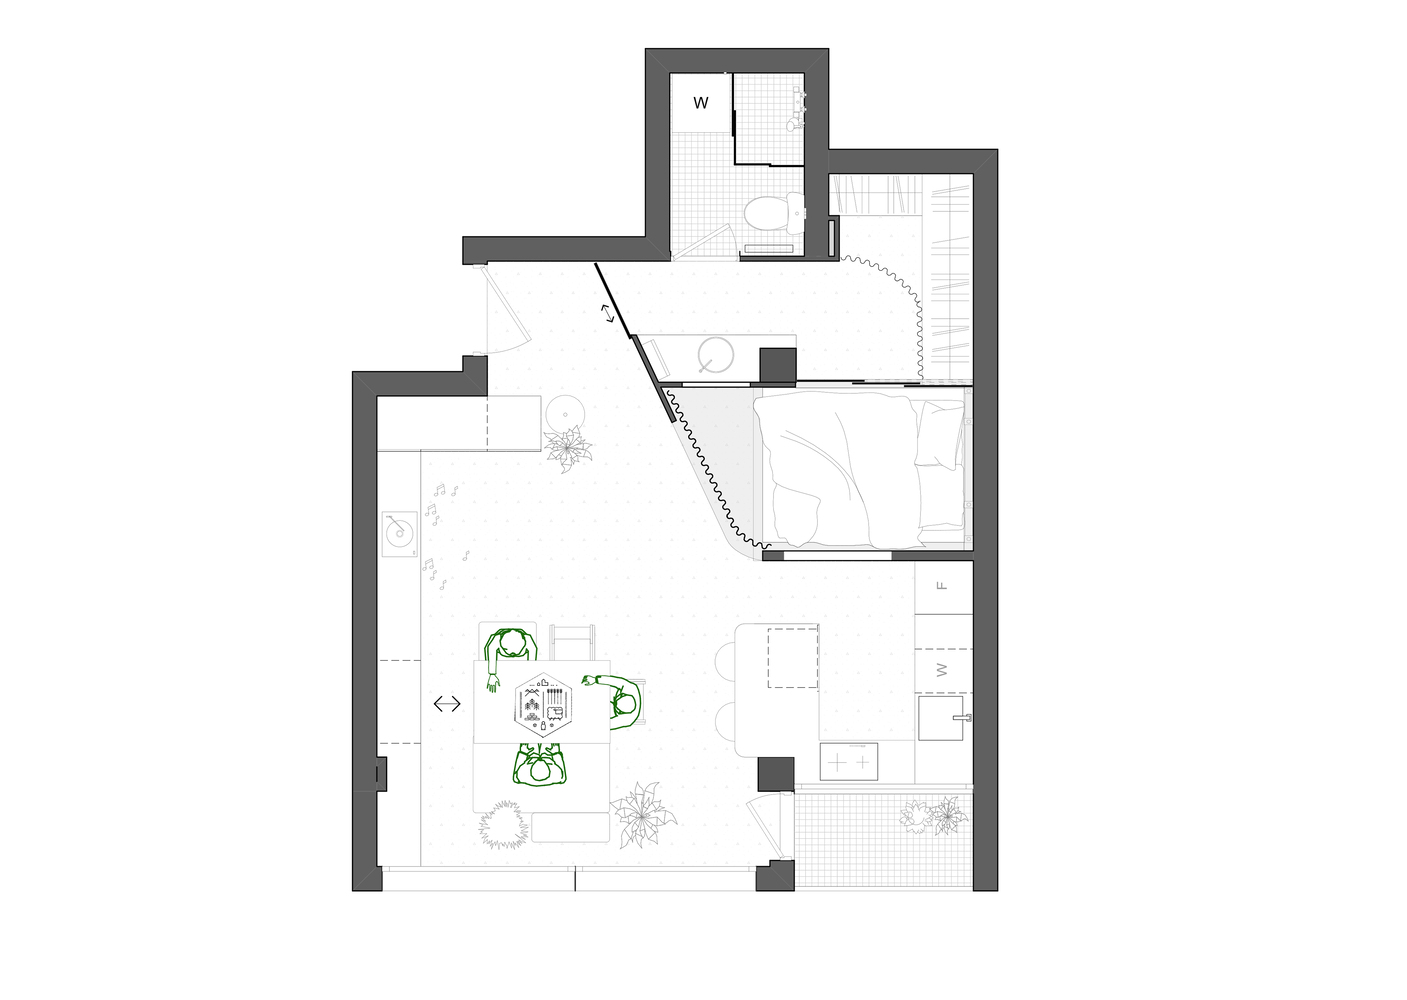 Cherry Art Hub,公寓设计案例,公寓设计方案,小户型设计,塞尔维亚,公寓改造,小户型改造,35㎡